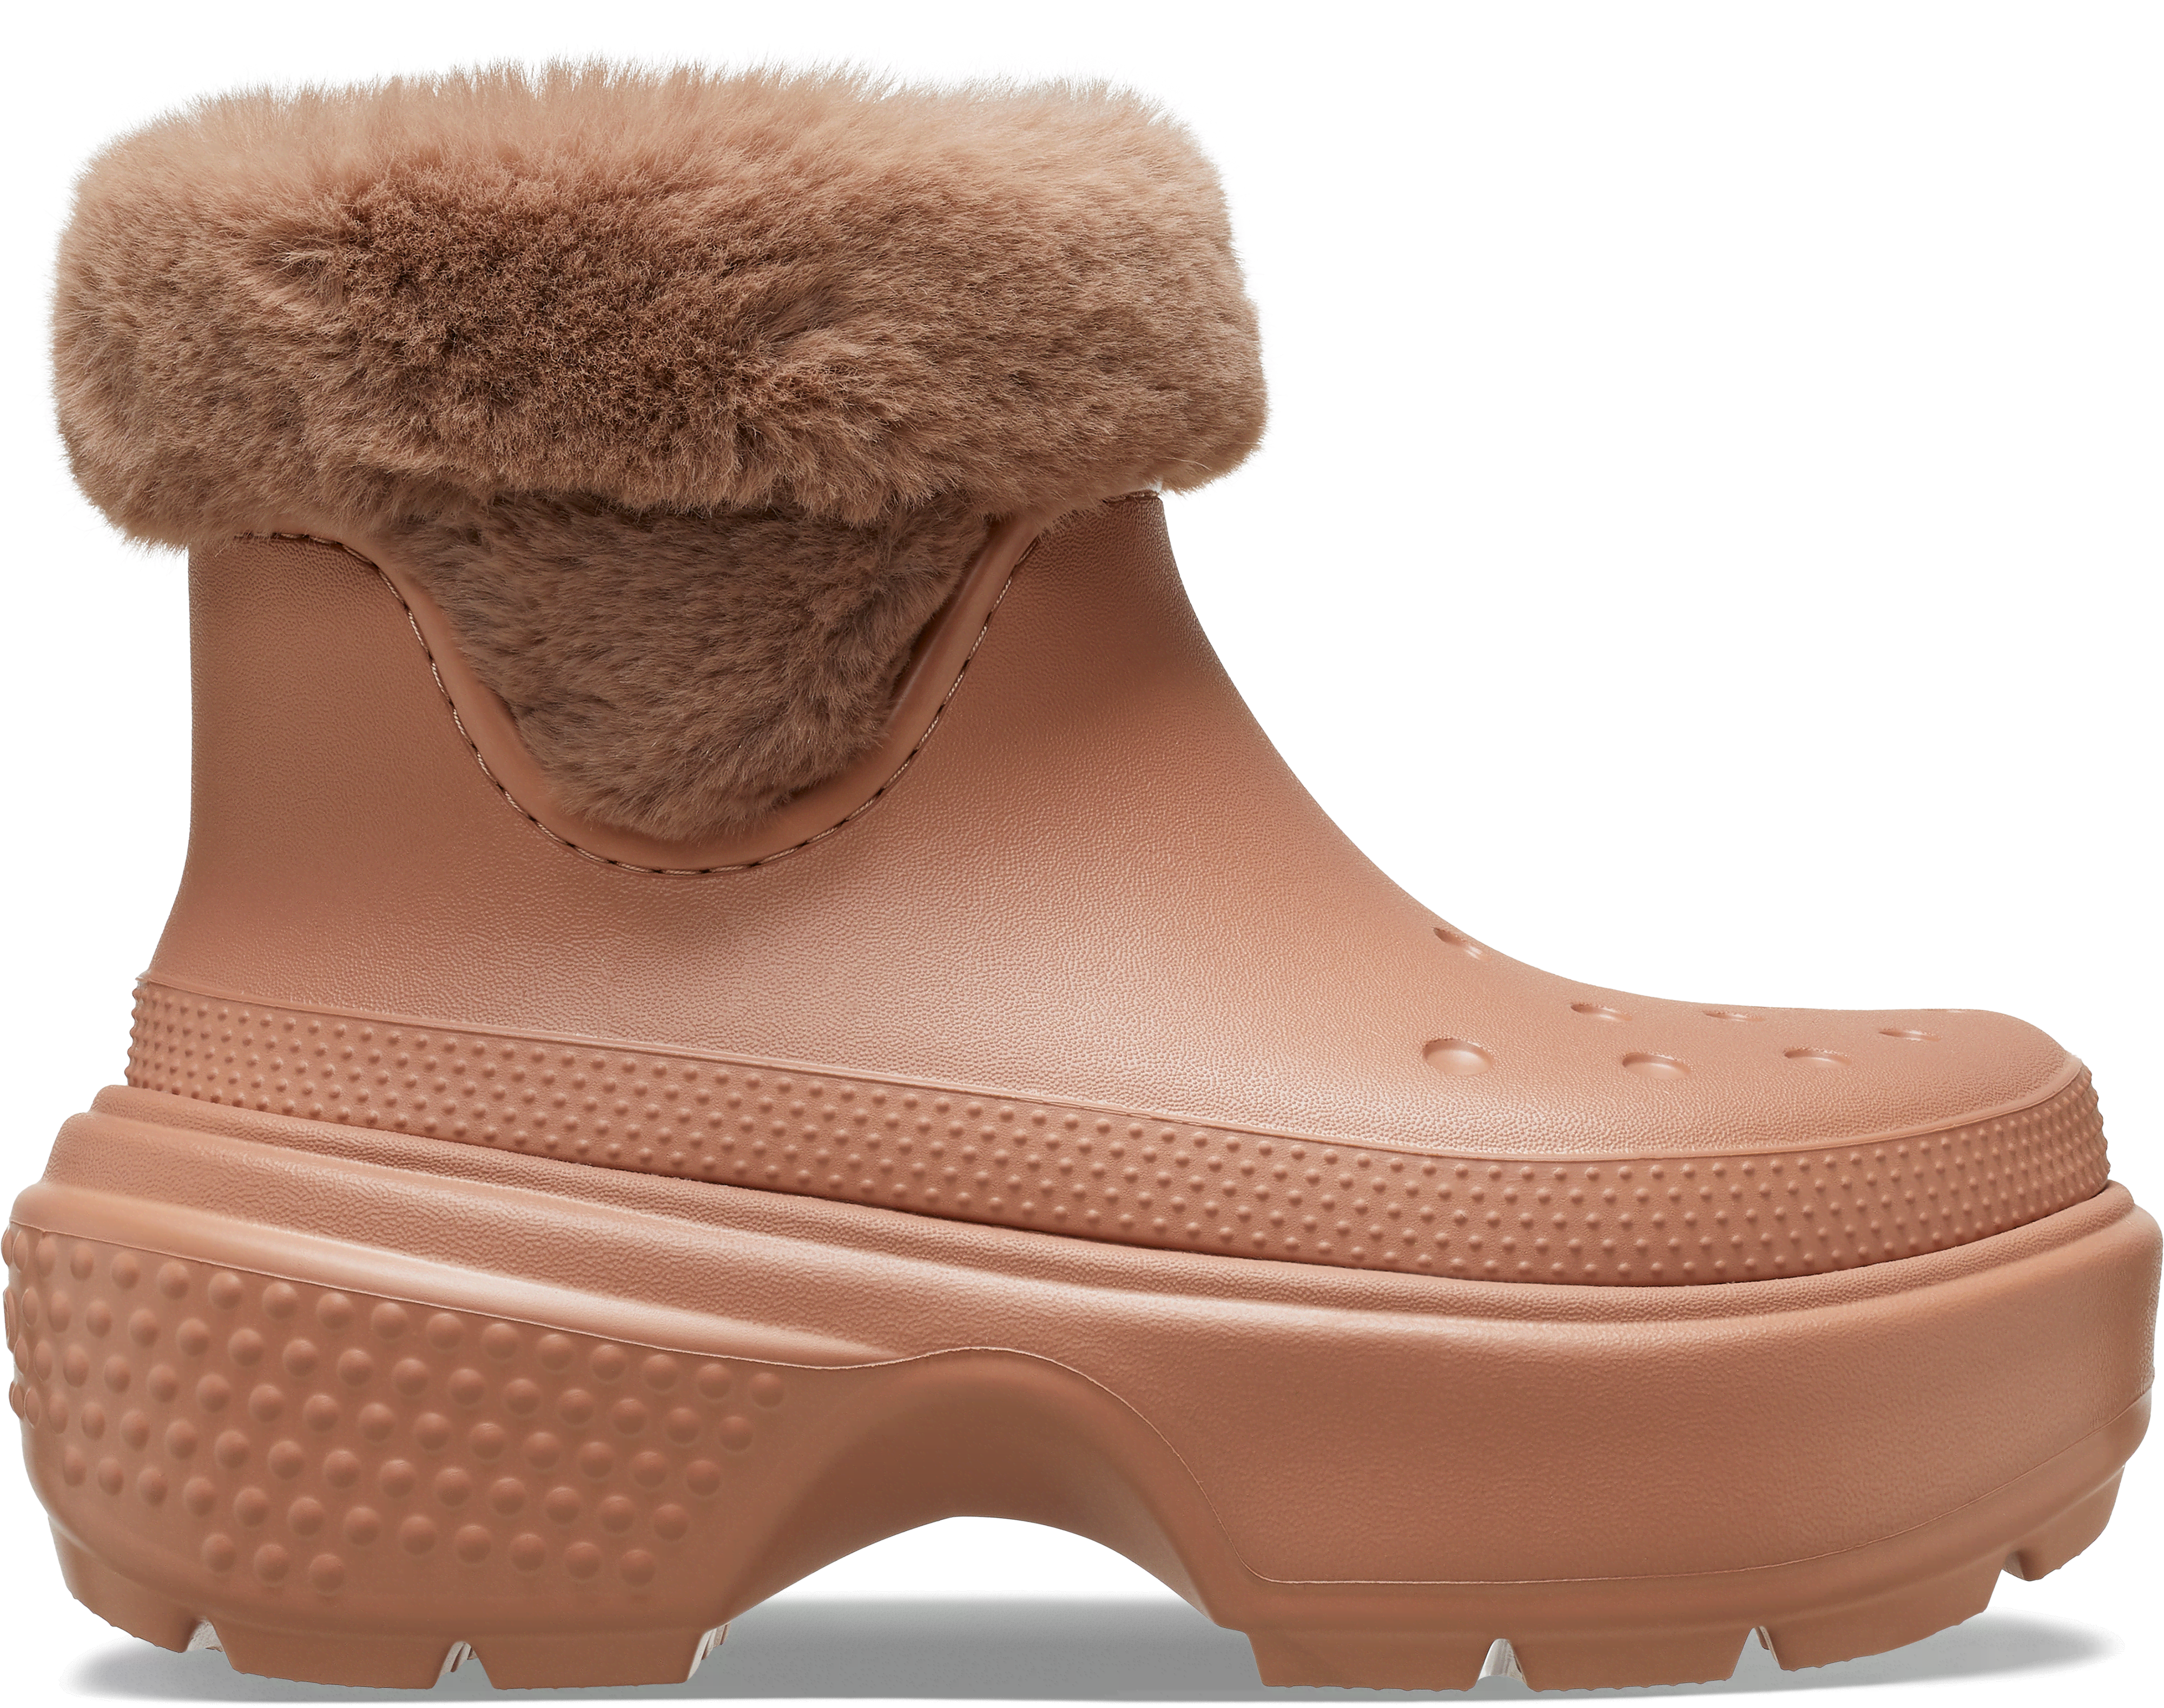 Crocs | Unisex | Stomp Lined Boot | Boots | Cork | W8/M7